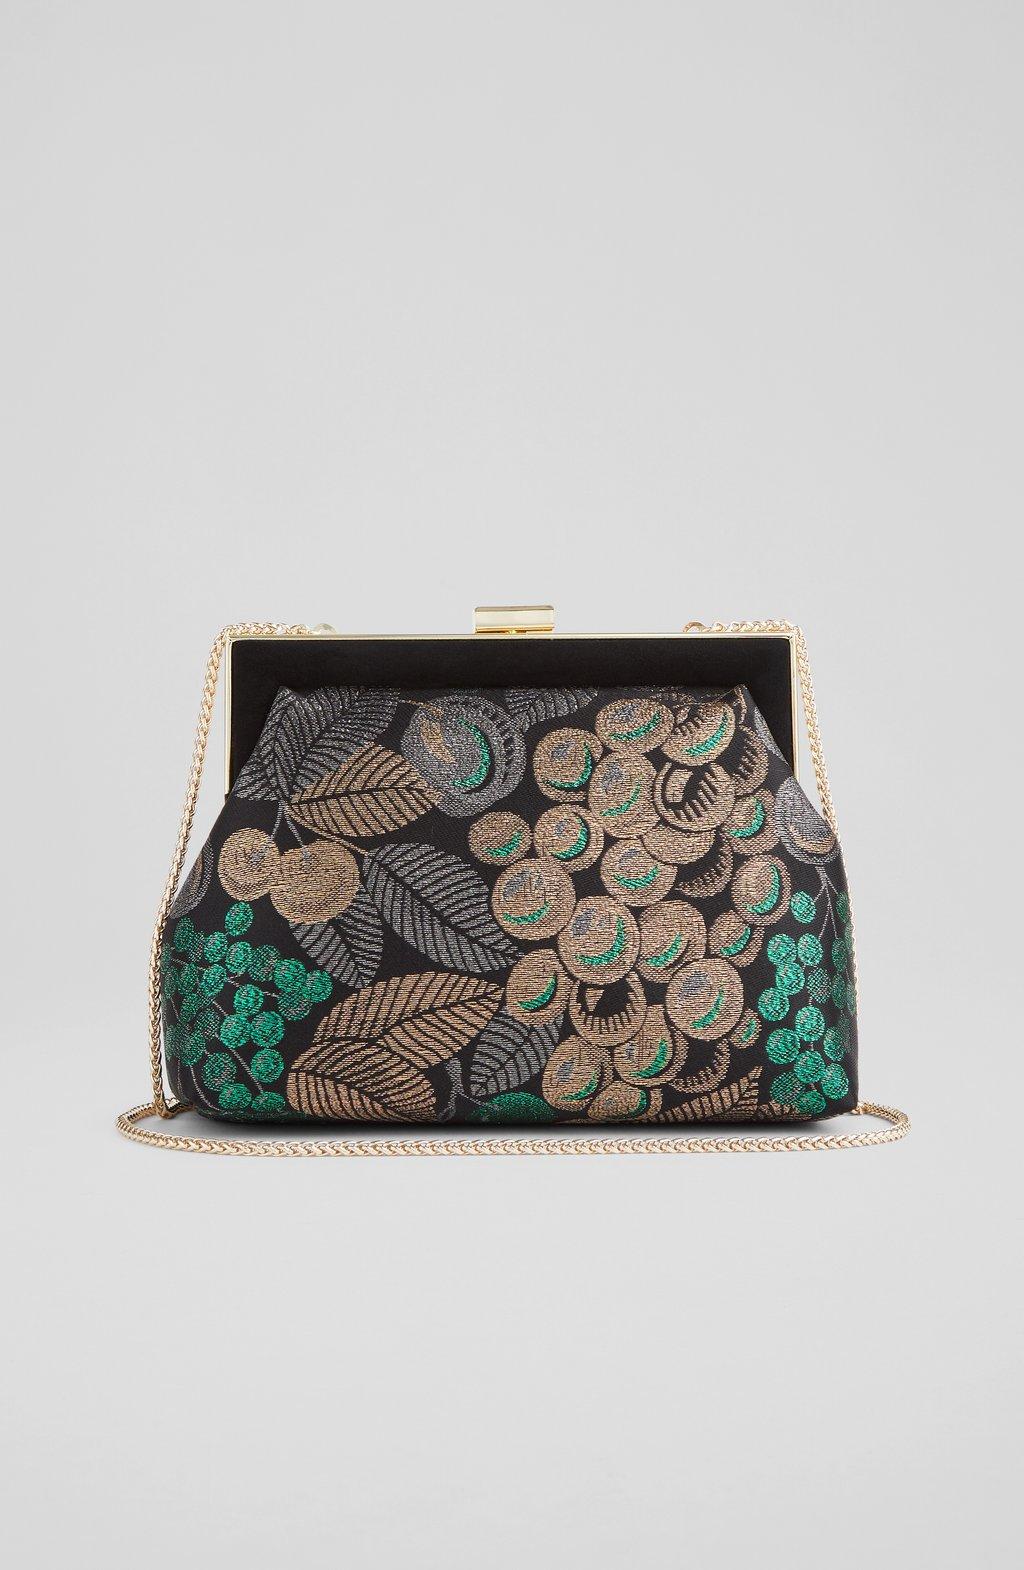 Luxury Designer Leather Clutch Handbag - Womens Envelope Evening Bag